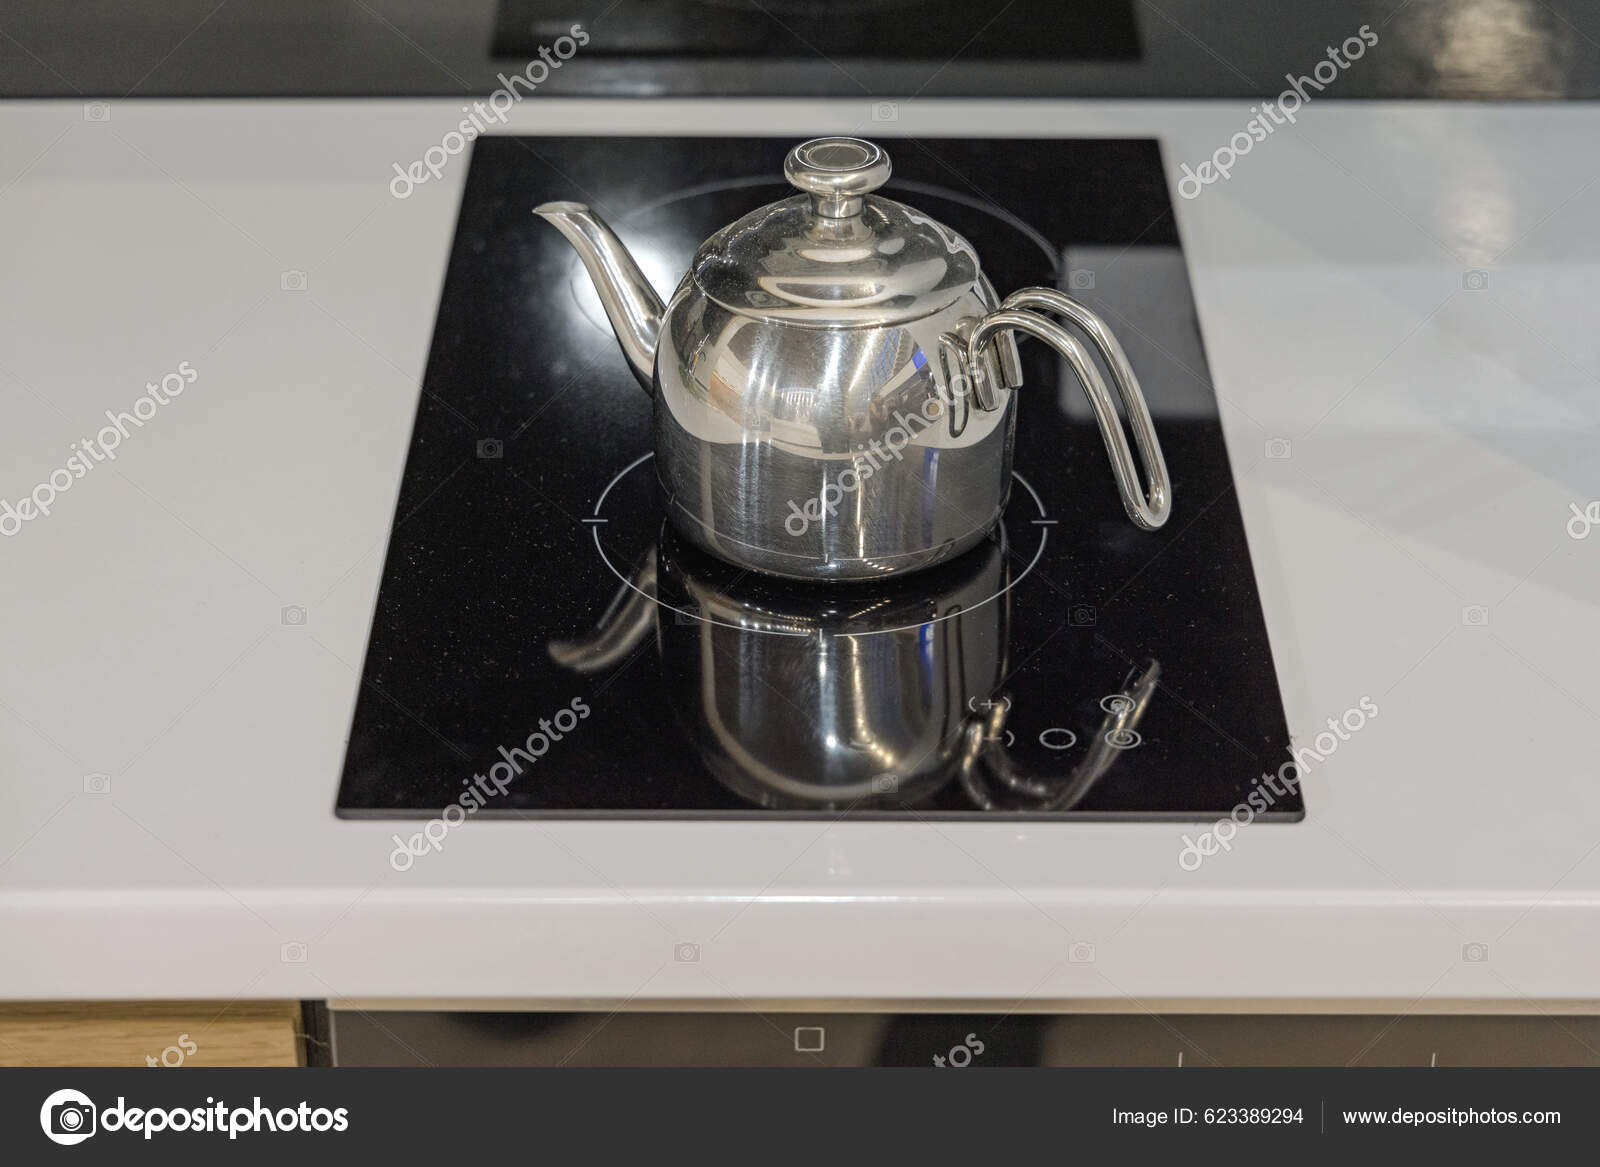 https://st5.depositphotos.com/1005951/62338/i/1600/depositphotos_623389294-stock-photo-stainless-steel-tea-kettle-induction.jpg